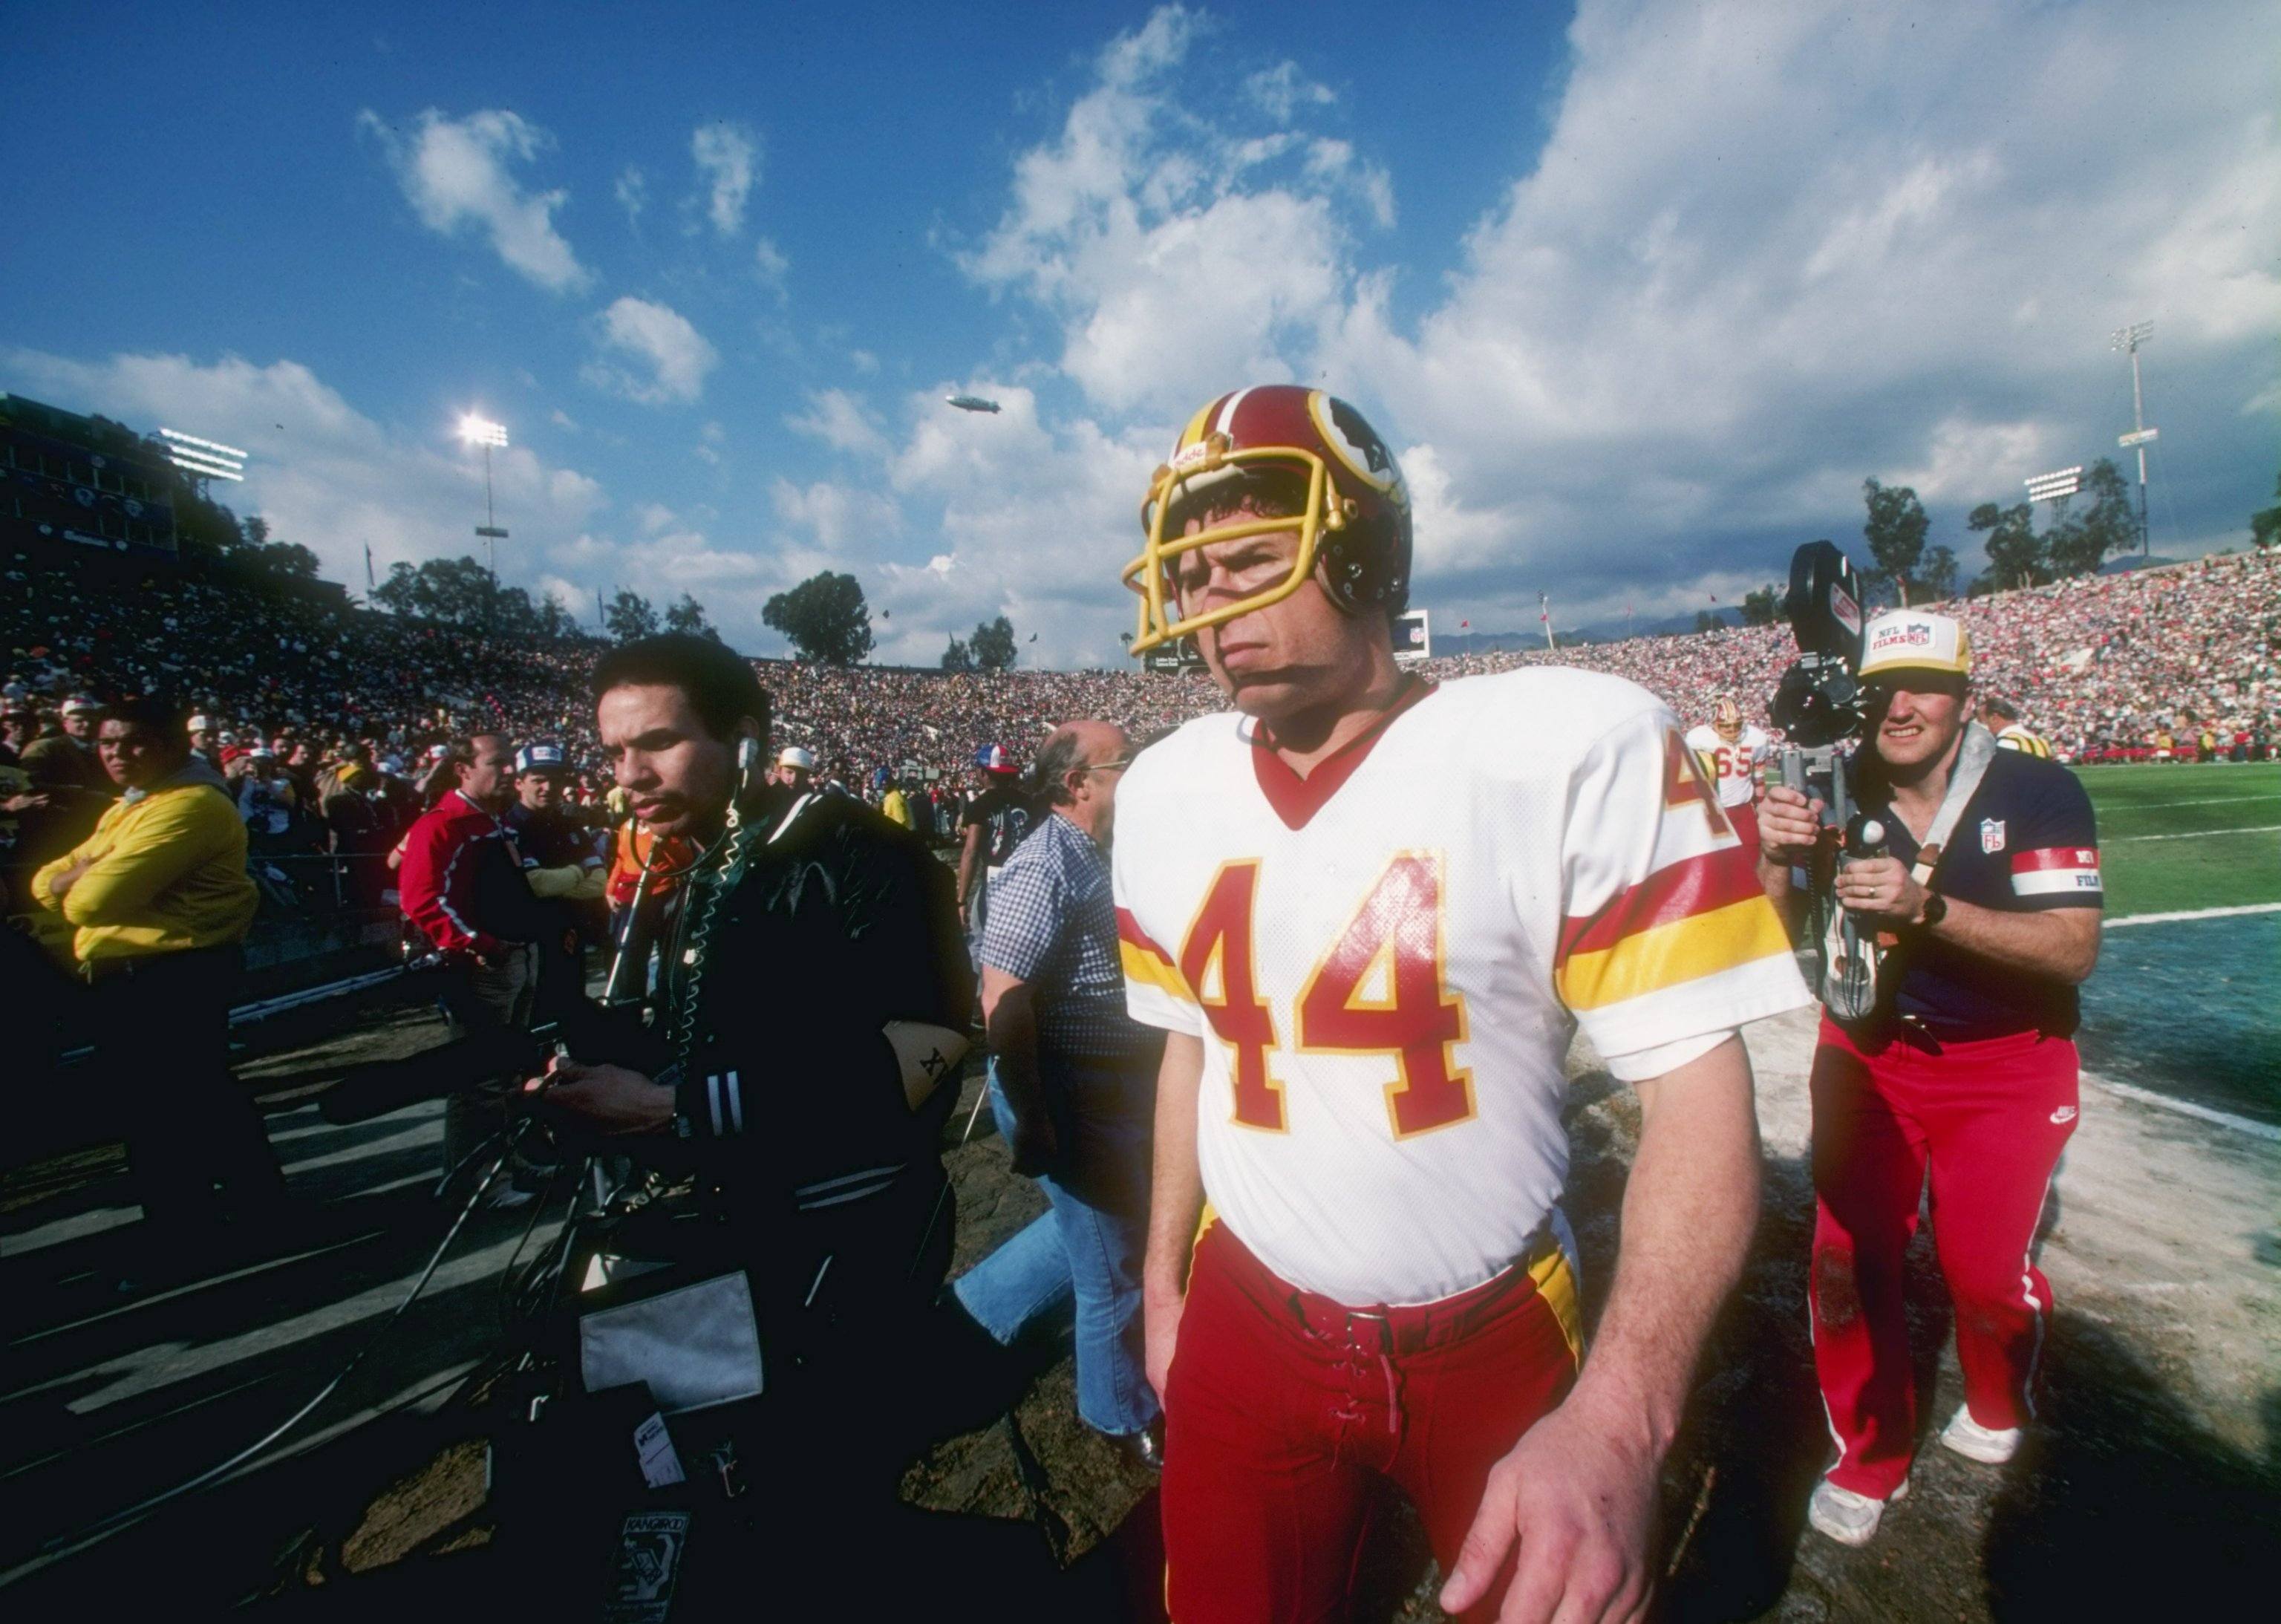 Running back John Riggins of the Washington Redskins looks on during Super Bowl XVII.